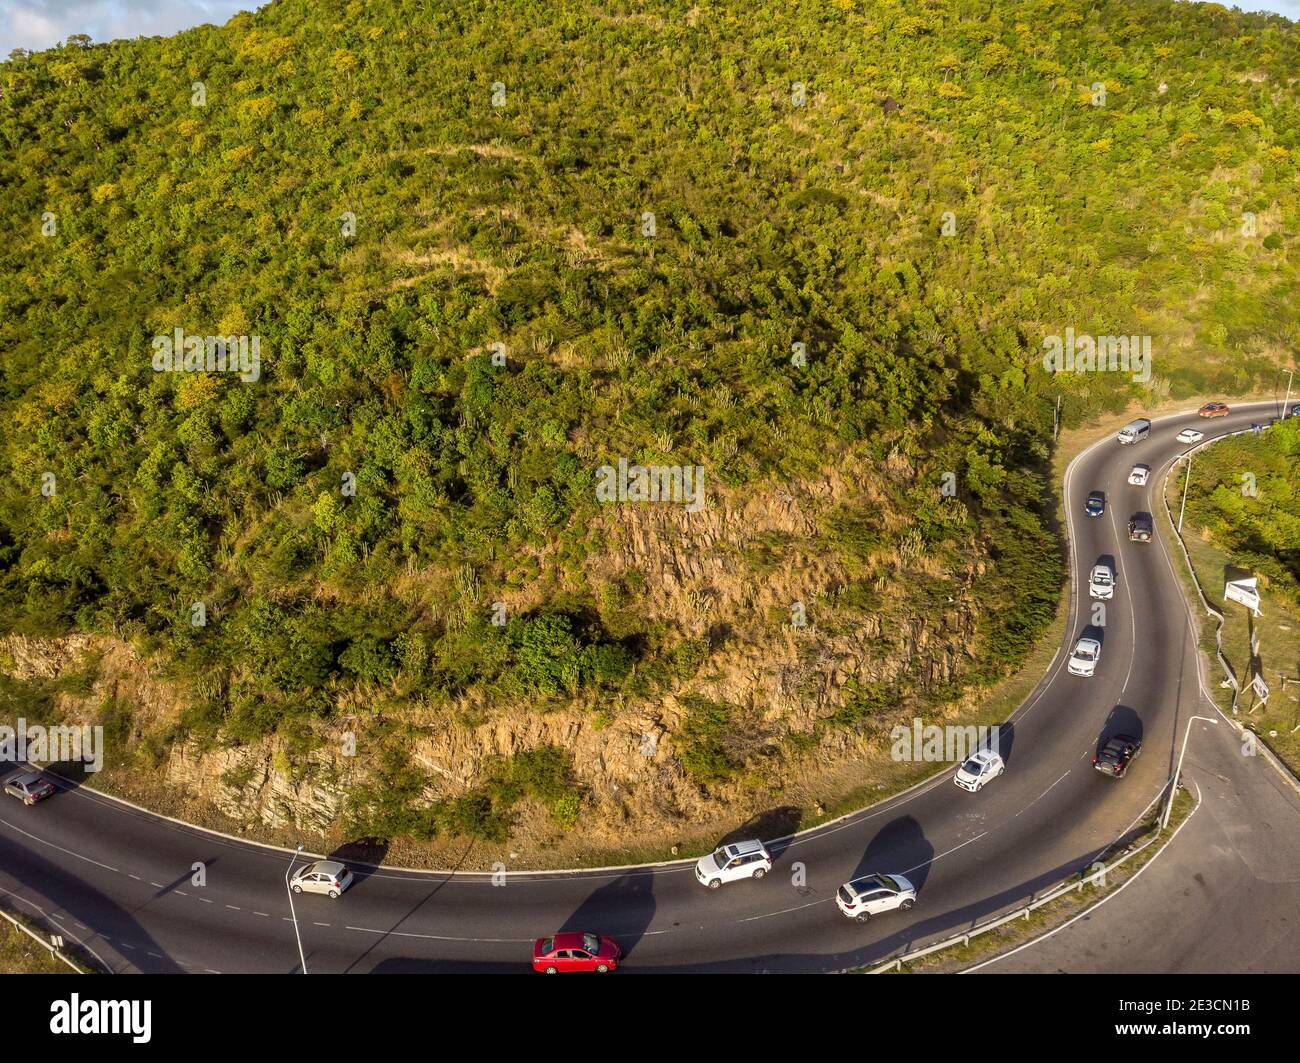 Aerial view of the caribbean island of St.maarten. Caribbean island citycsape. Stock Photo